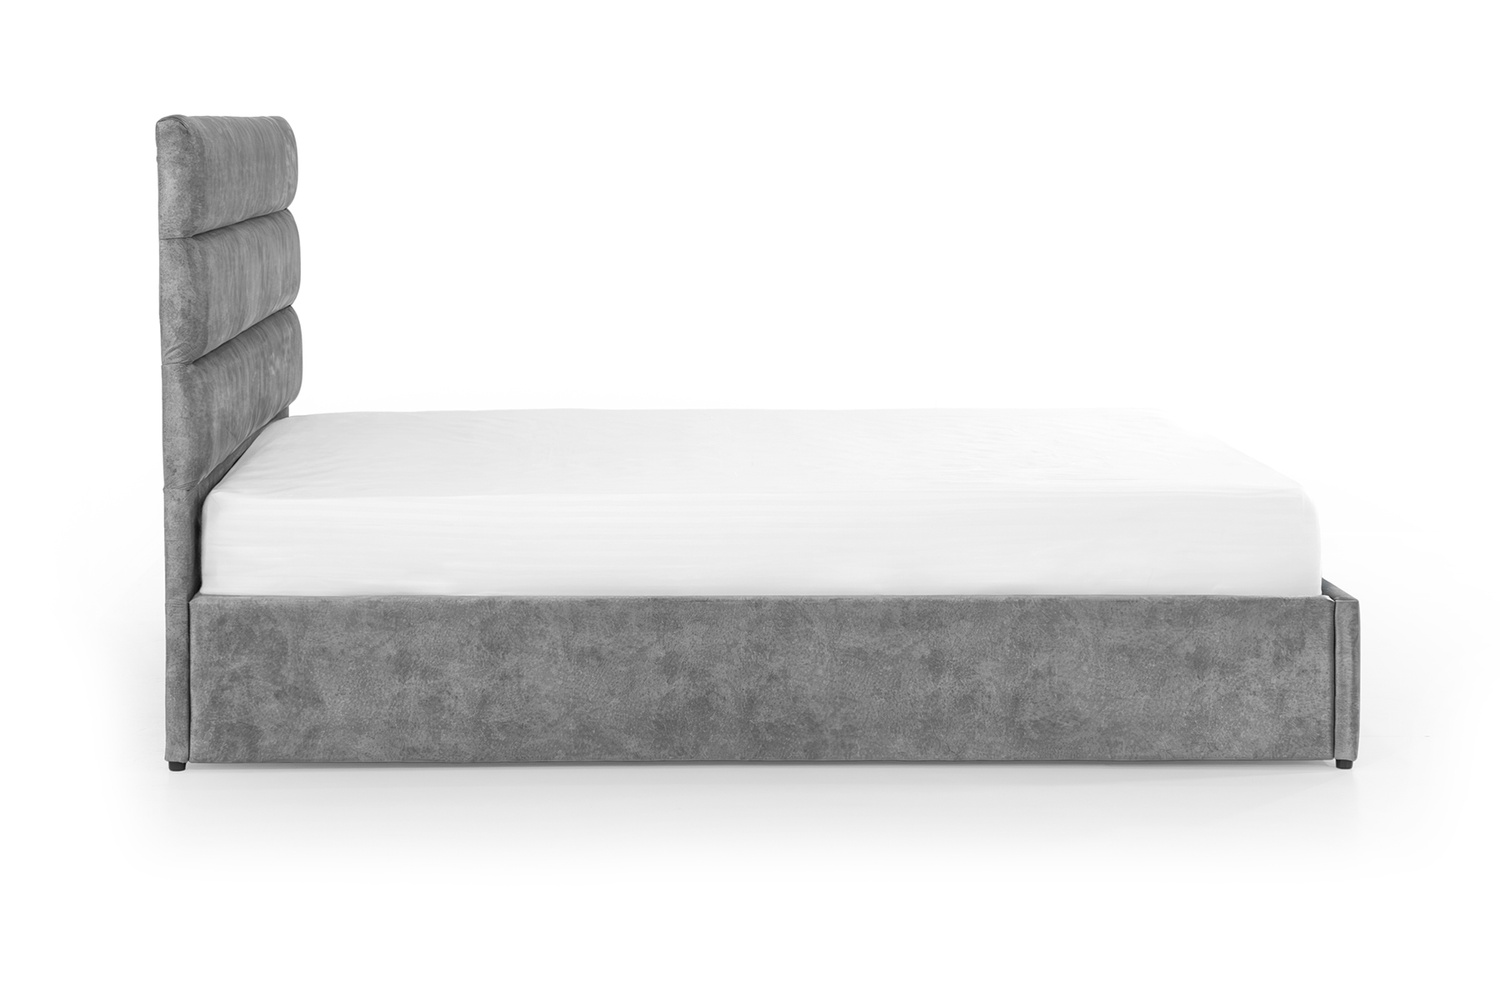 Кровать Лилия 140х200 (Светло-серый, ламели, без подъемного механизма) IMI lll140x200ssb фото